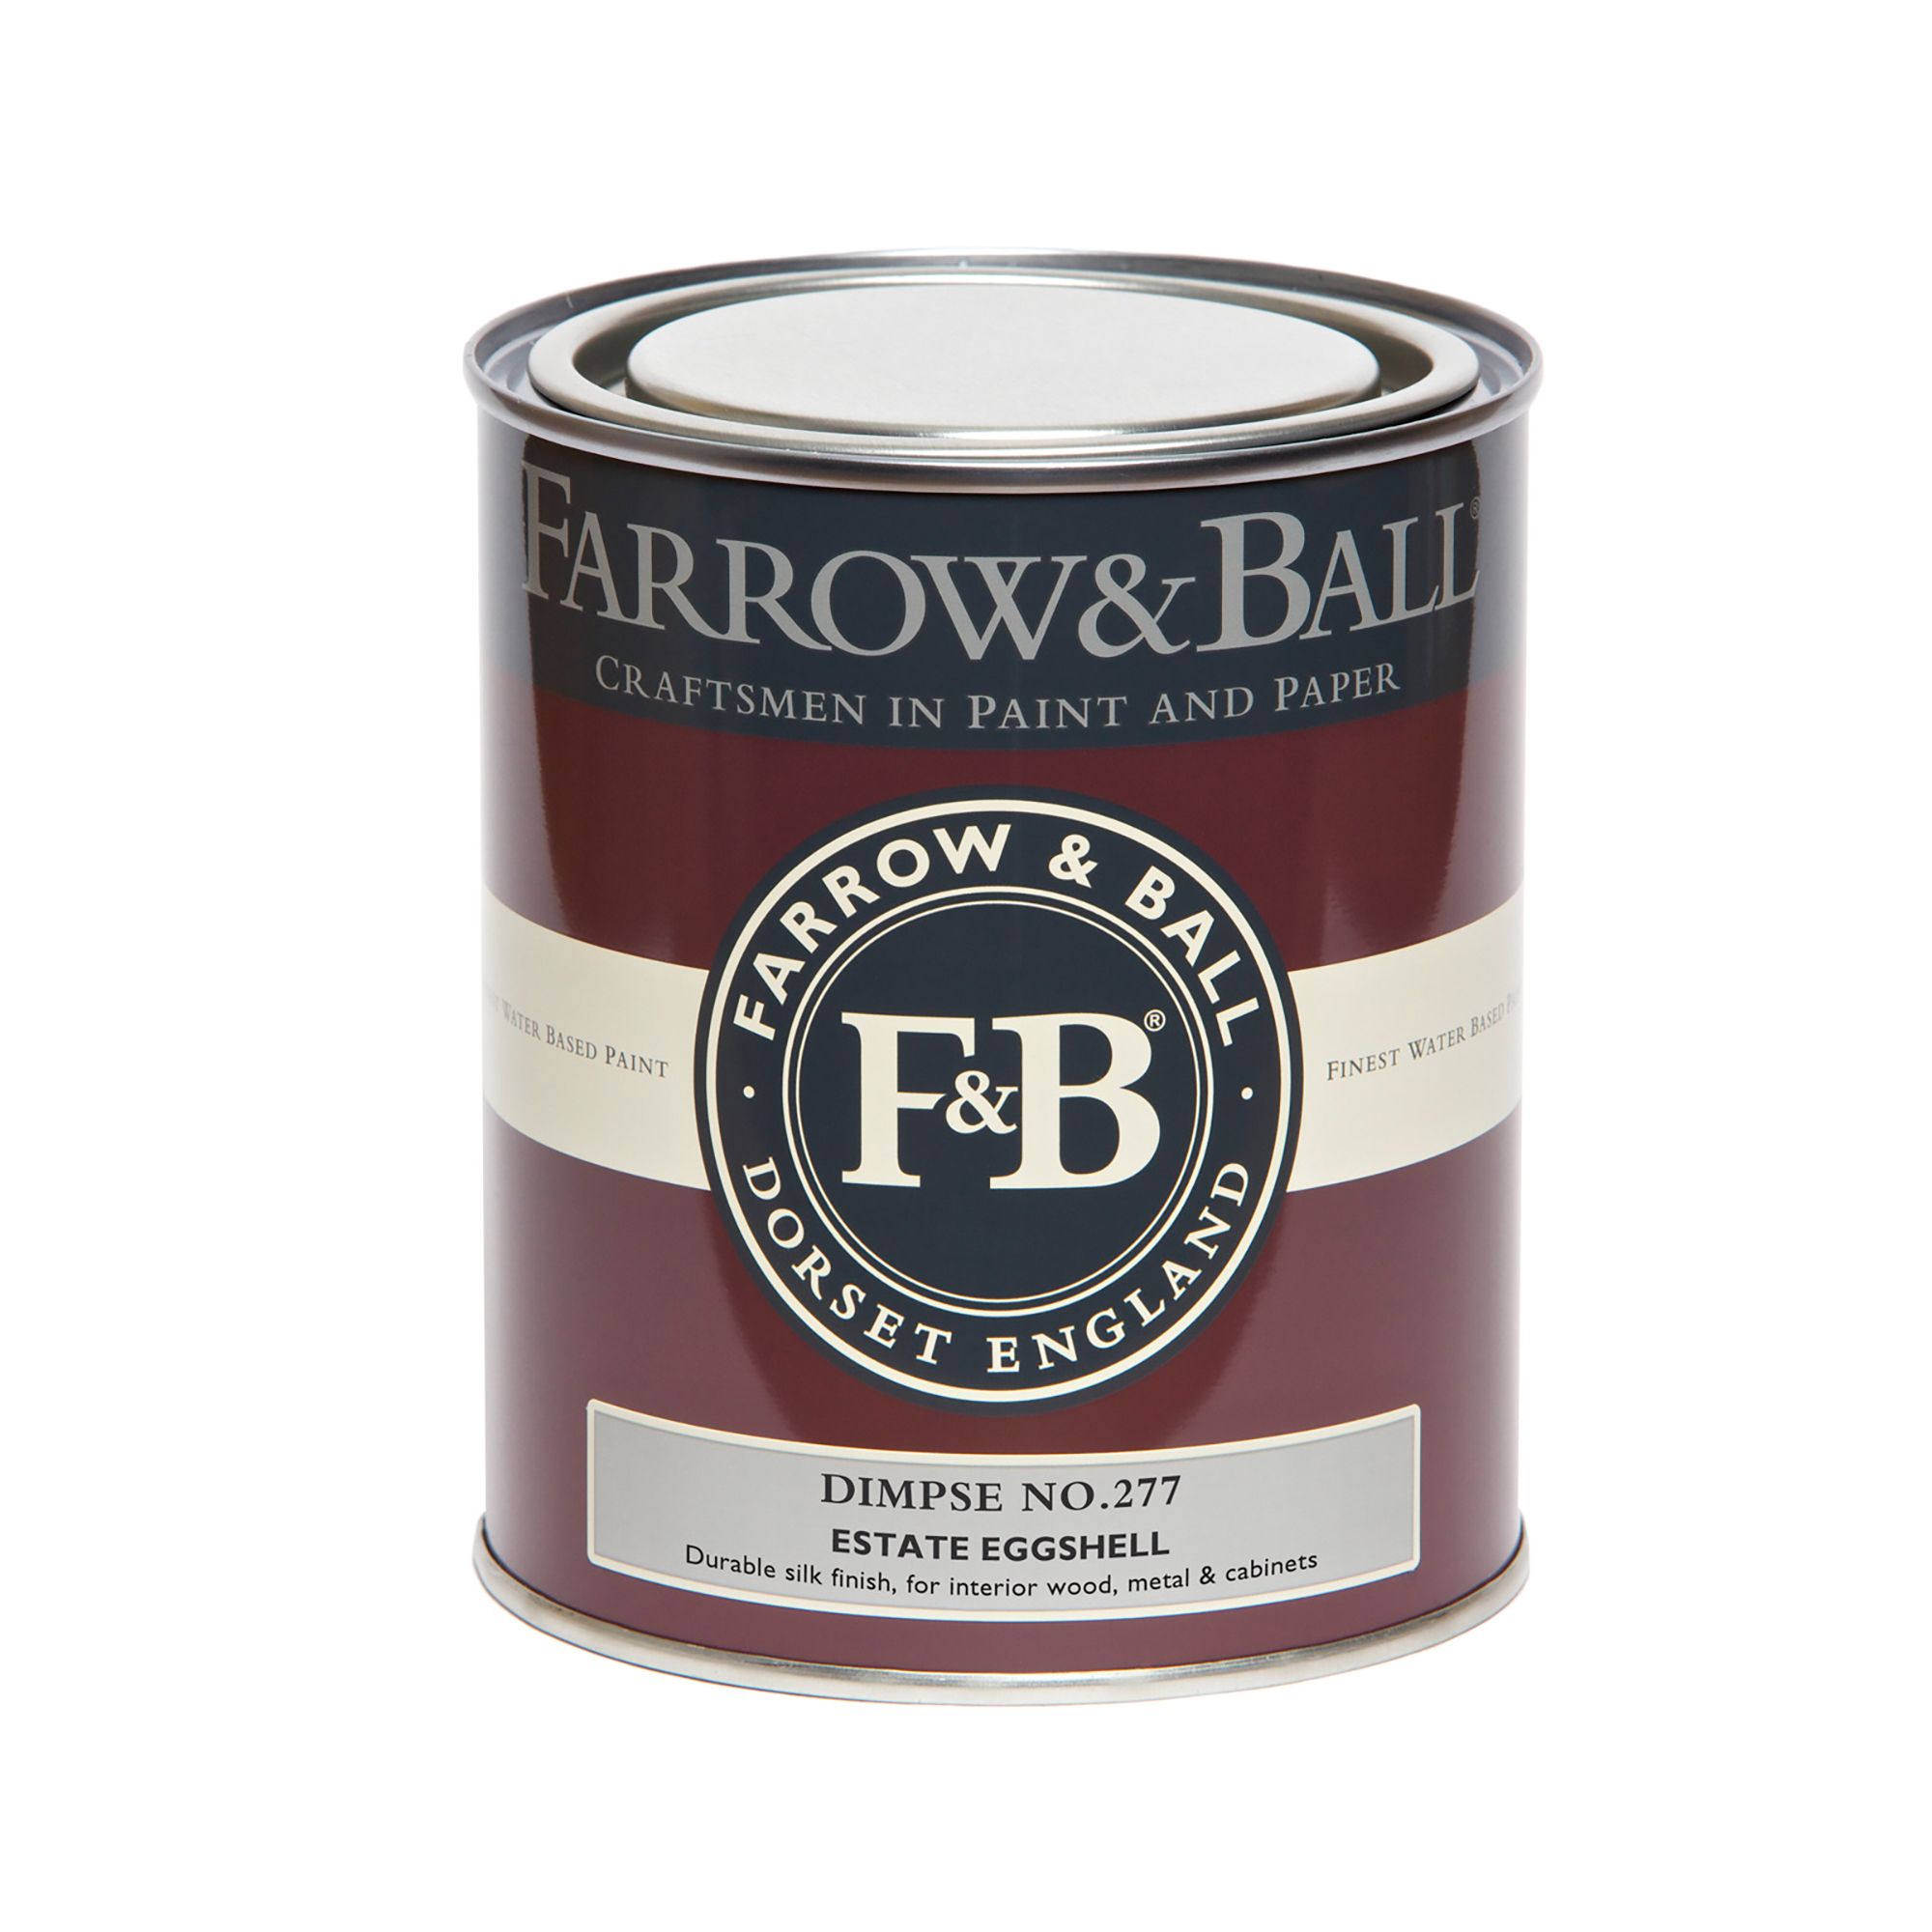 Farrow & Ball Estate Dimpse No.277 Eggshell Paint, 750ml